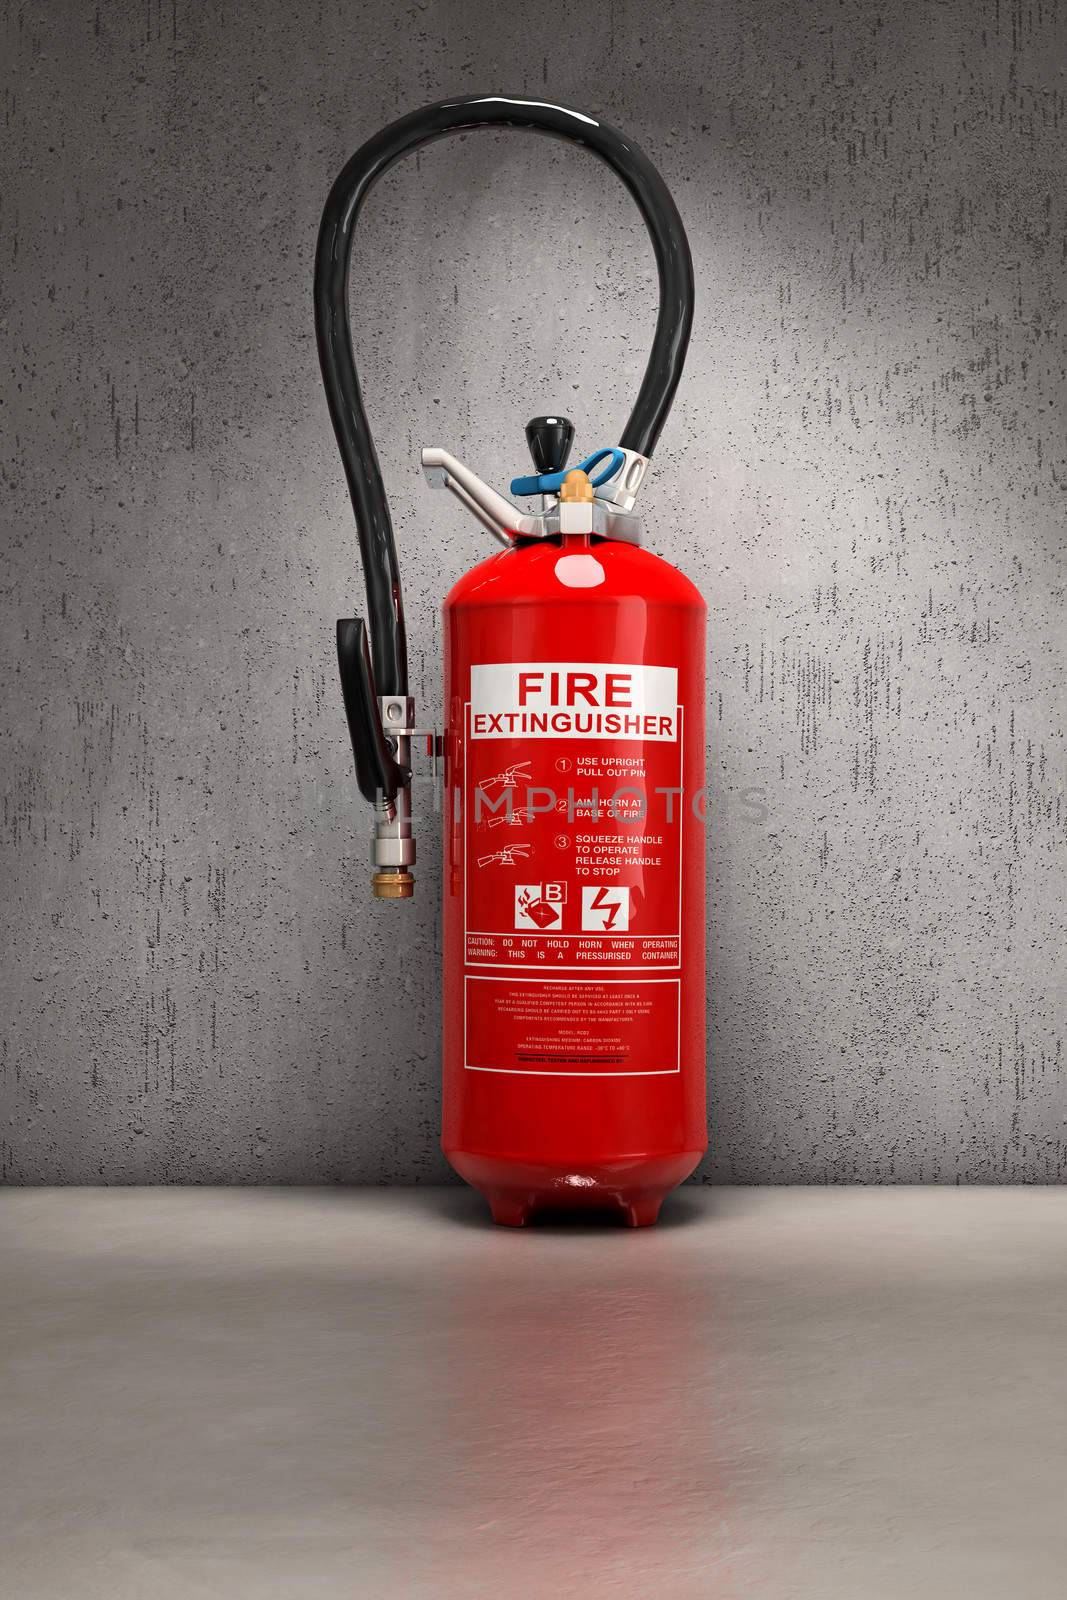 Extinguisher background by dynamicfoto